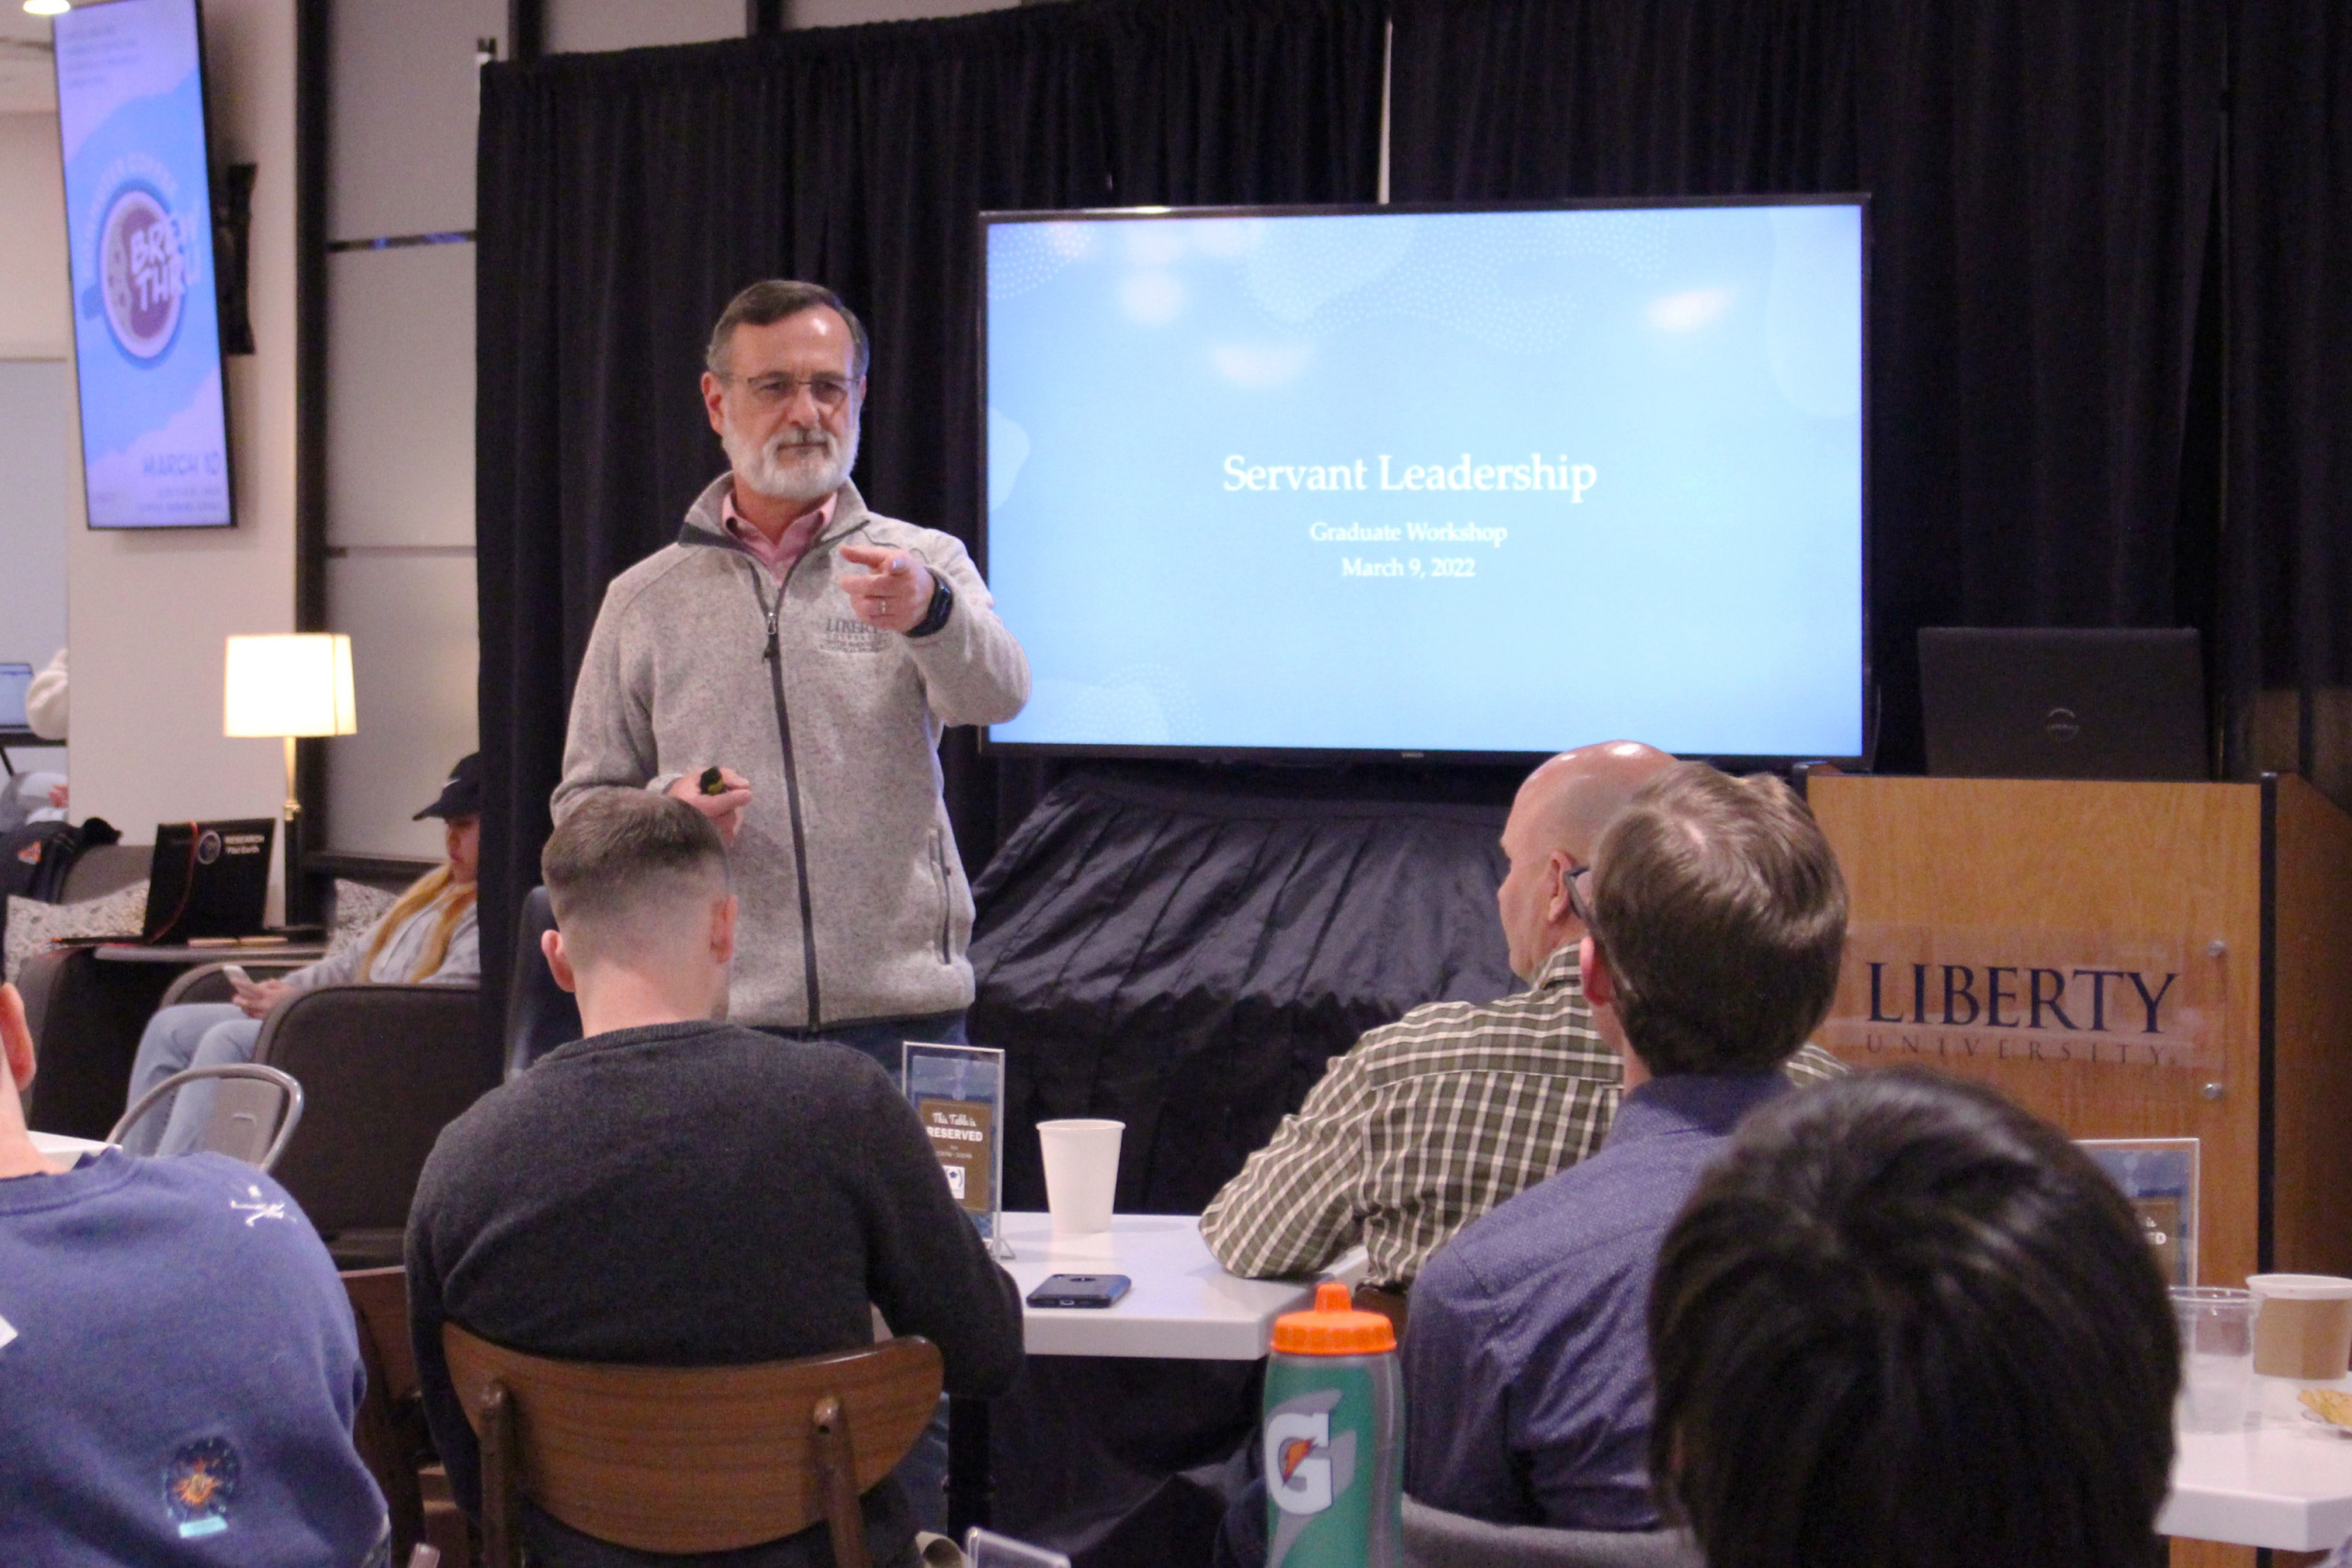 Divinity professor Mark Allen speaking at a Servant Leadership Workshop